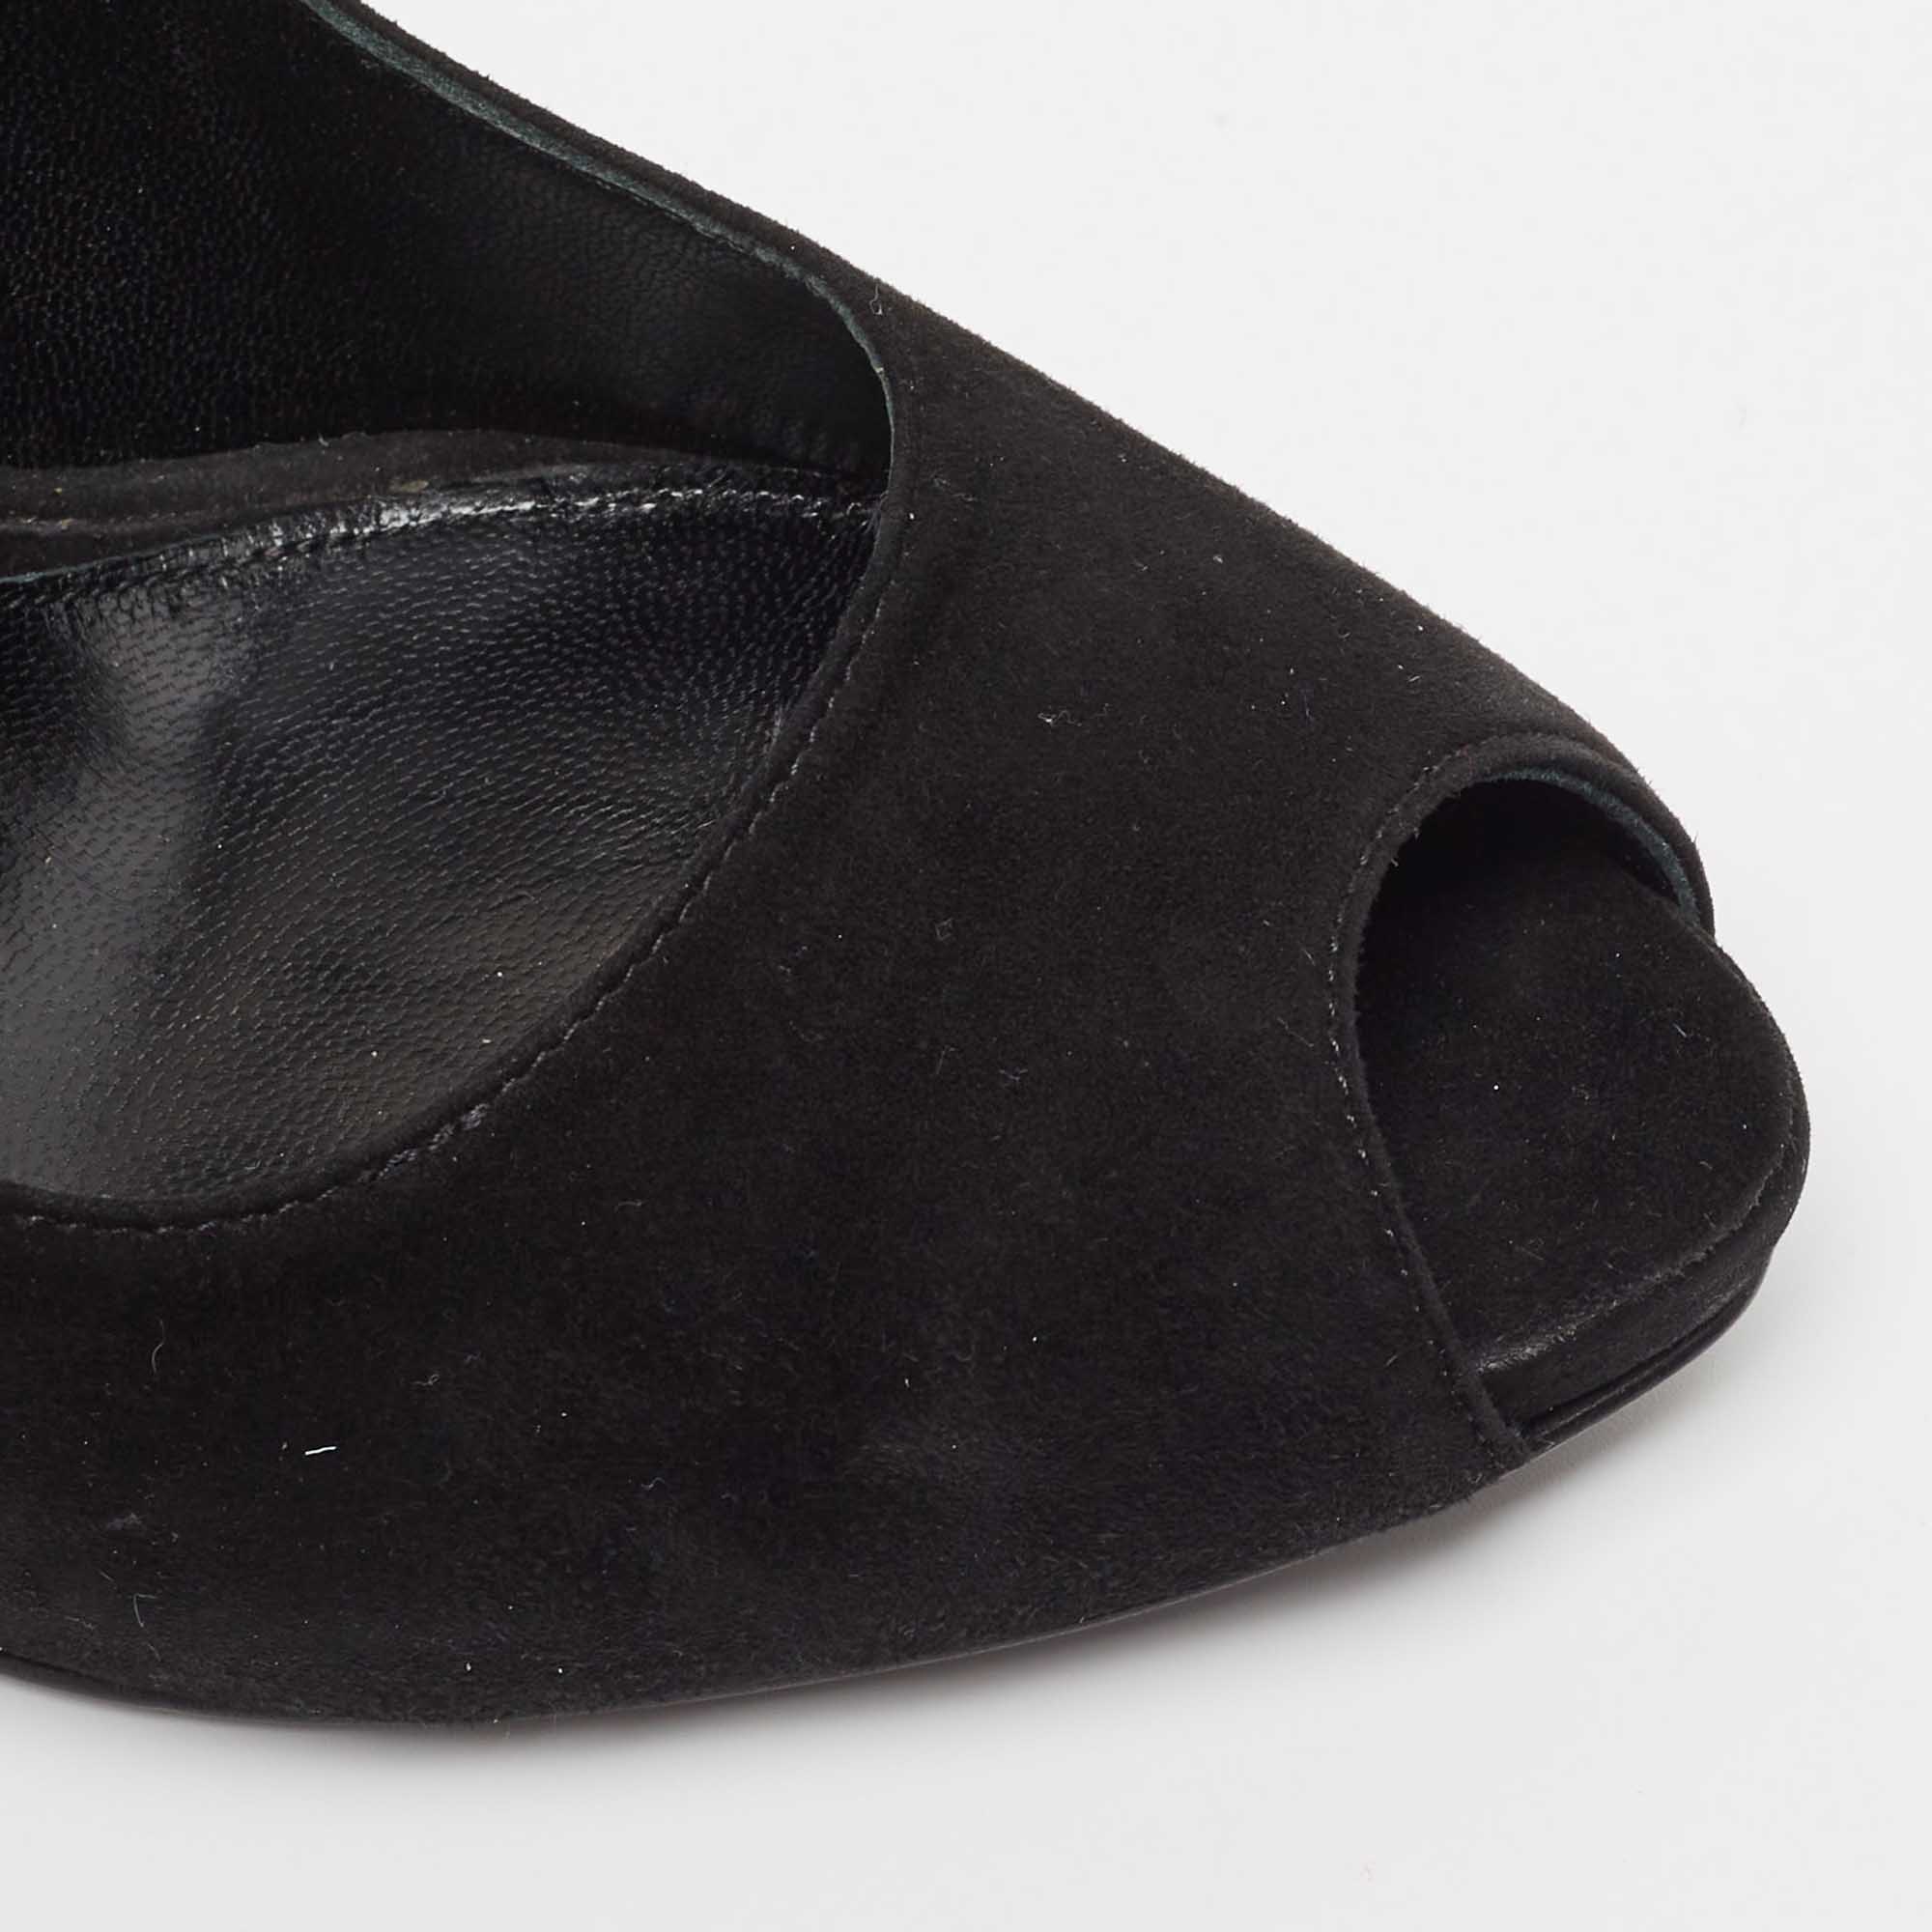 Alexander McQueen Black Suede Knot Detail Peep Toe Pumps Size 39.5